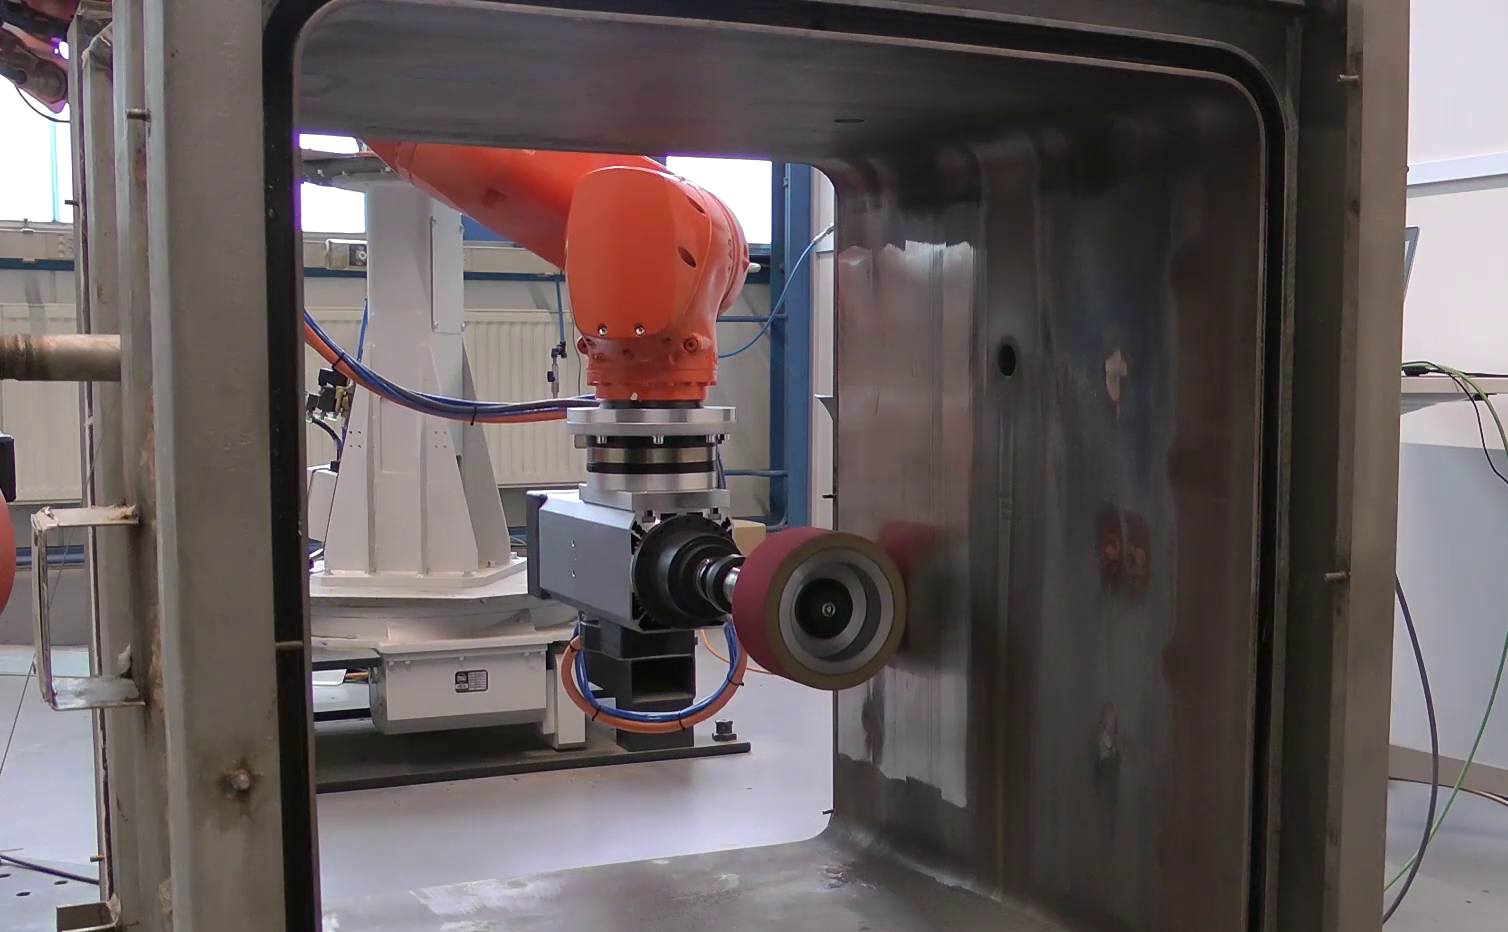 An industrial robot grinding a metal surface